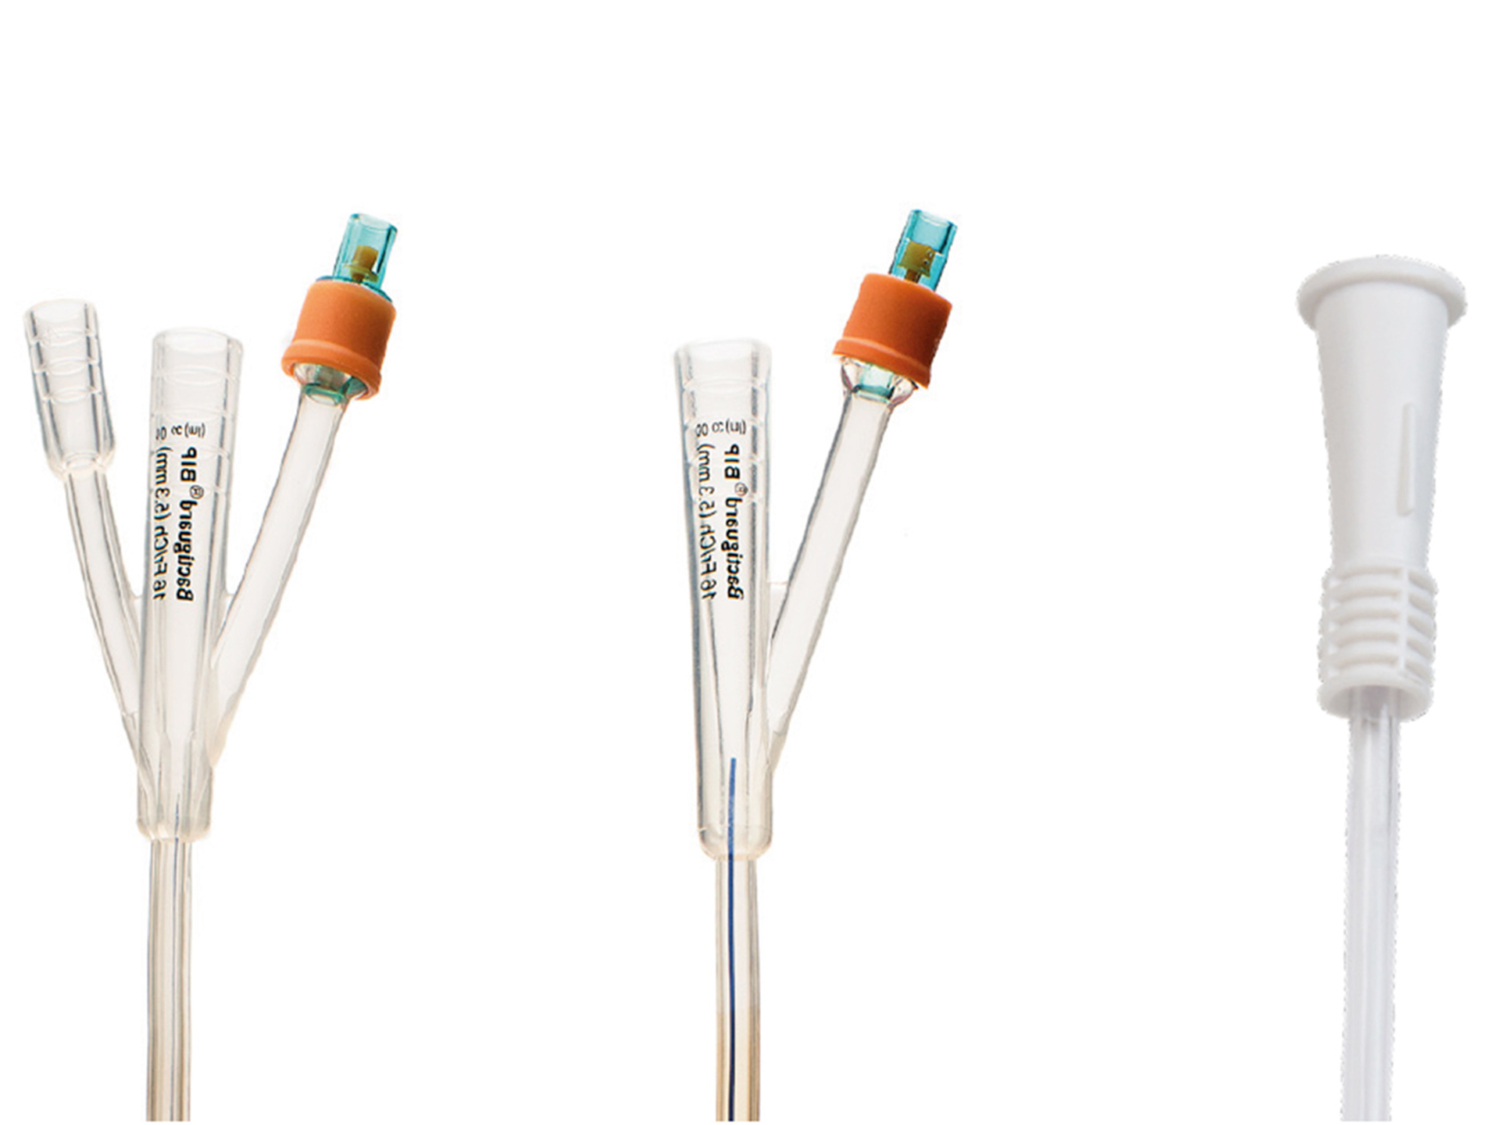 bactiguard-1-way-2-way-3-way-catheters-90degrees